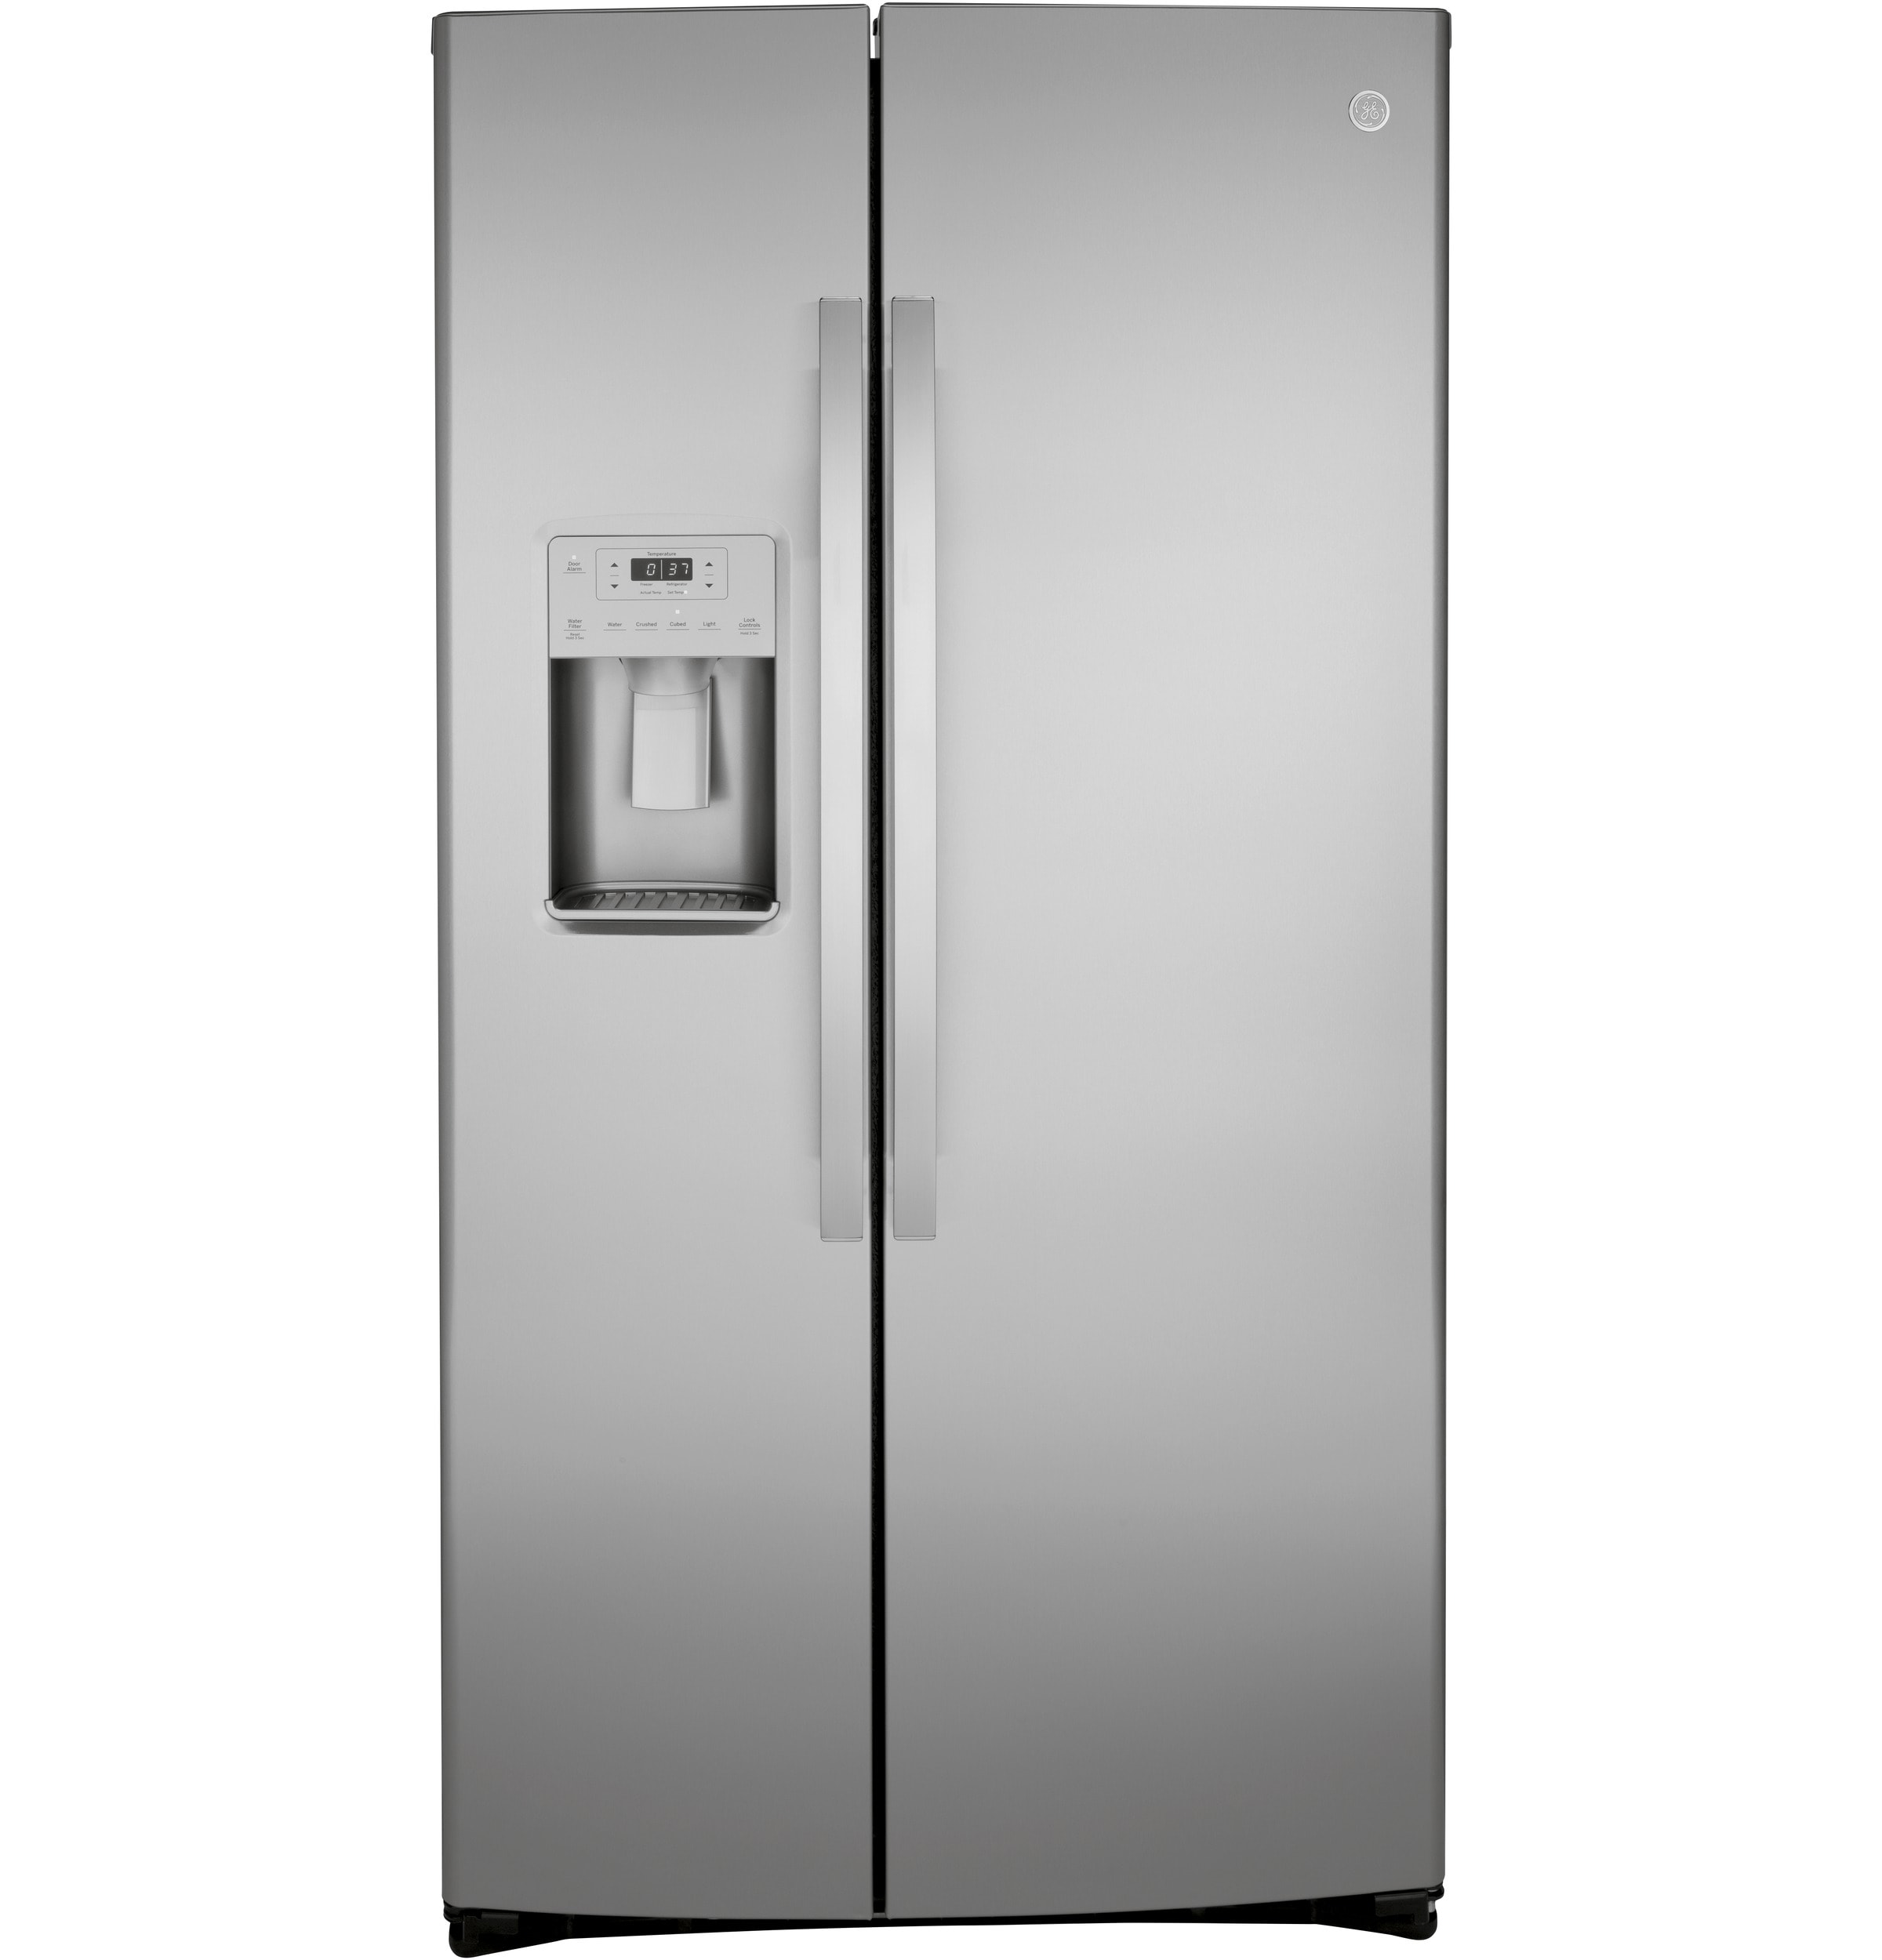 Refrigerators at Lowe's